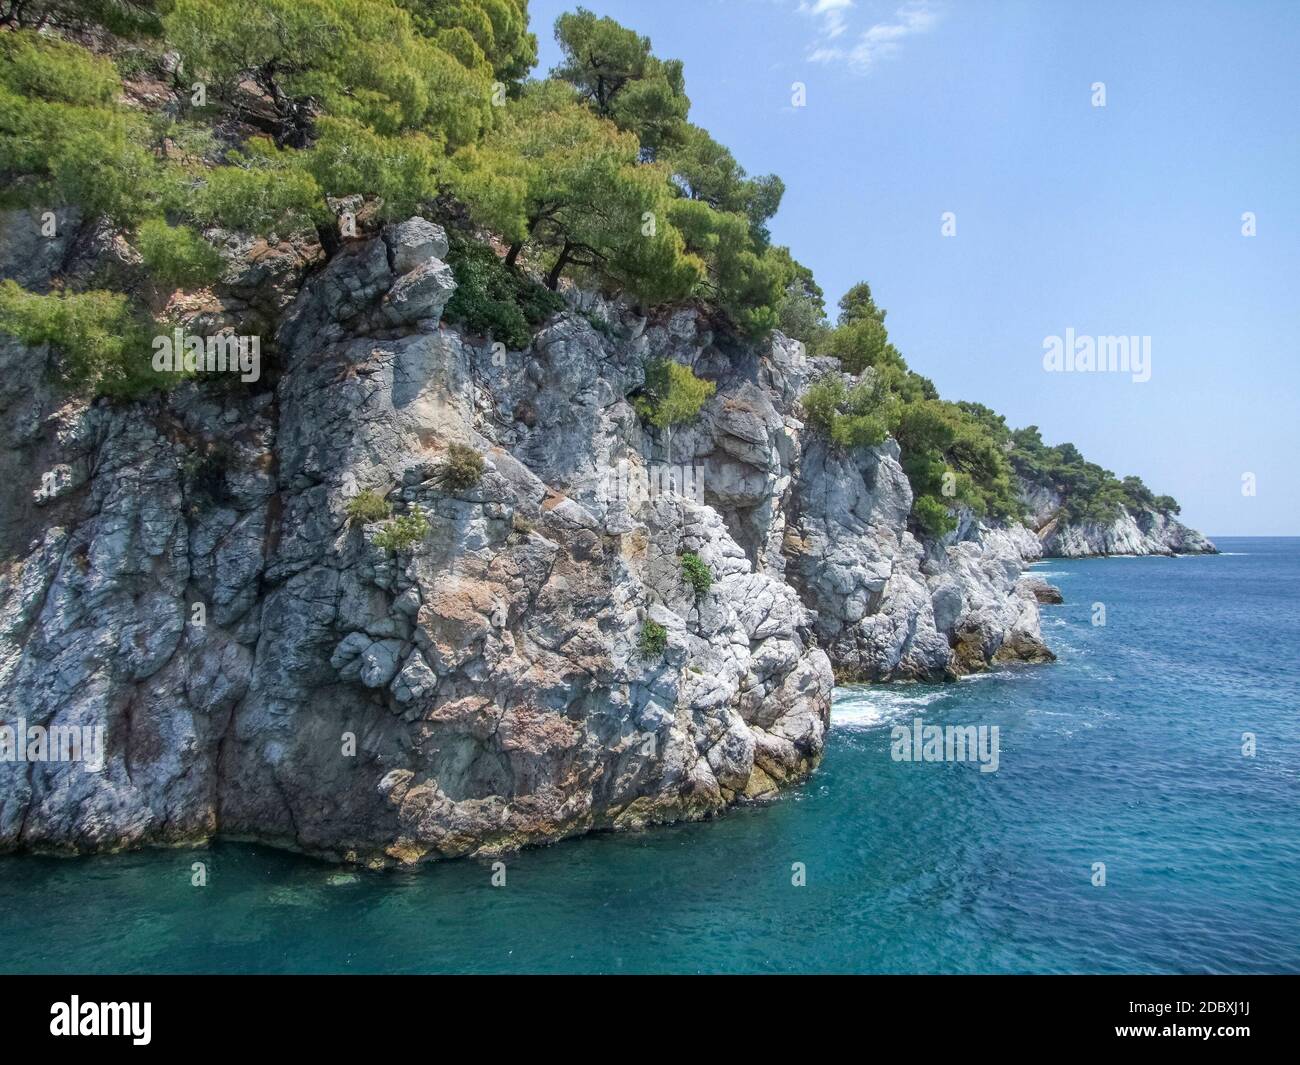 Amarantos rocce a Skopelos isola alle Sporadi in Grecia Foto Stock